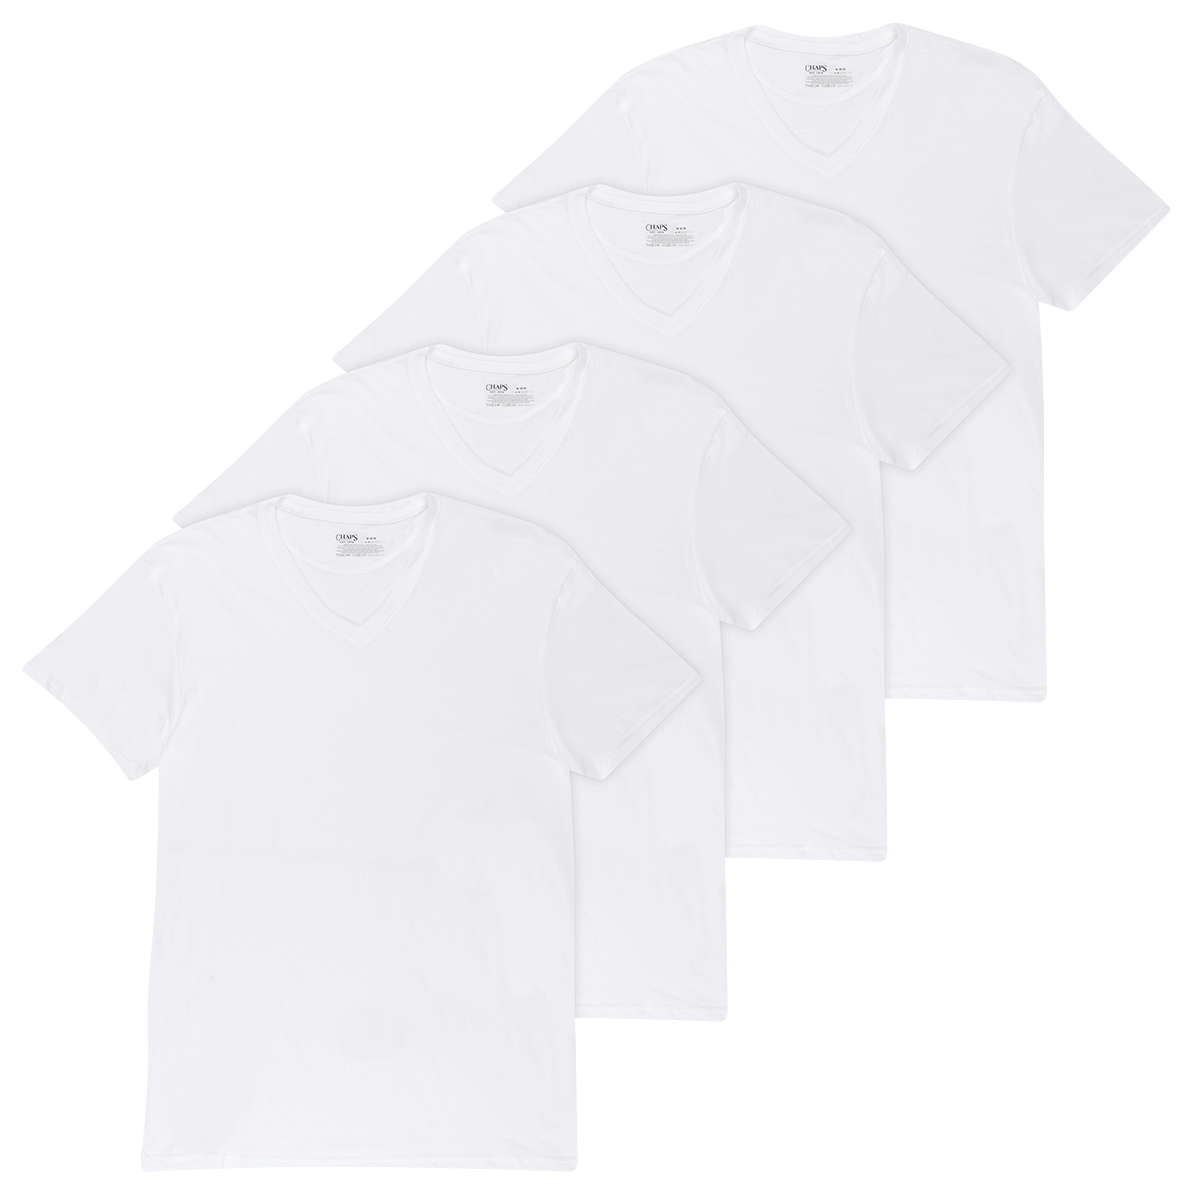 Chaps Men's Essentials V-Neck Short-Sleeve Tee, 4 Pack - White, M